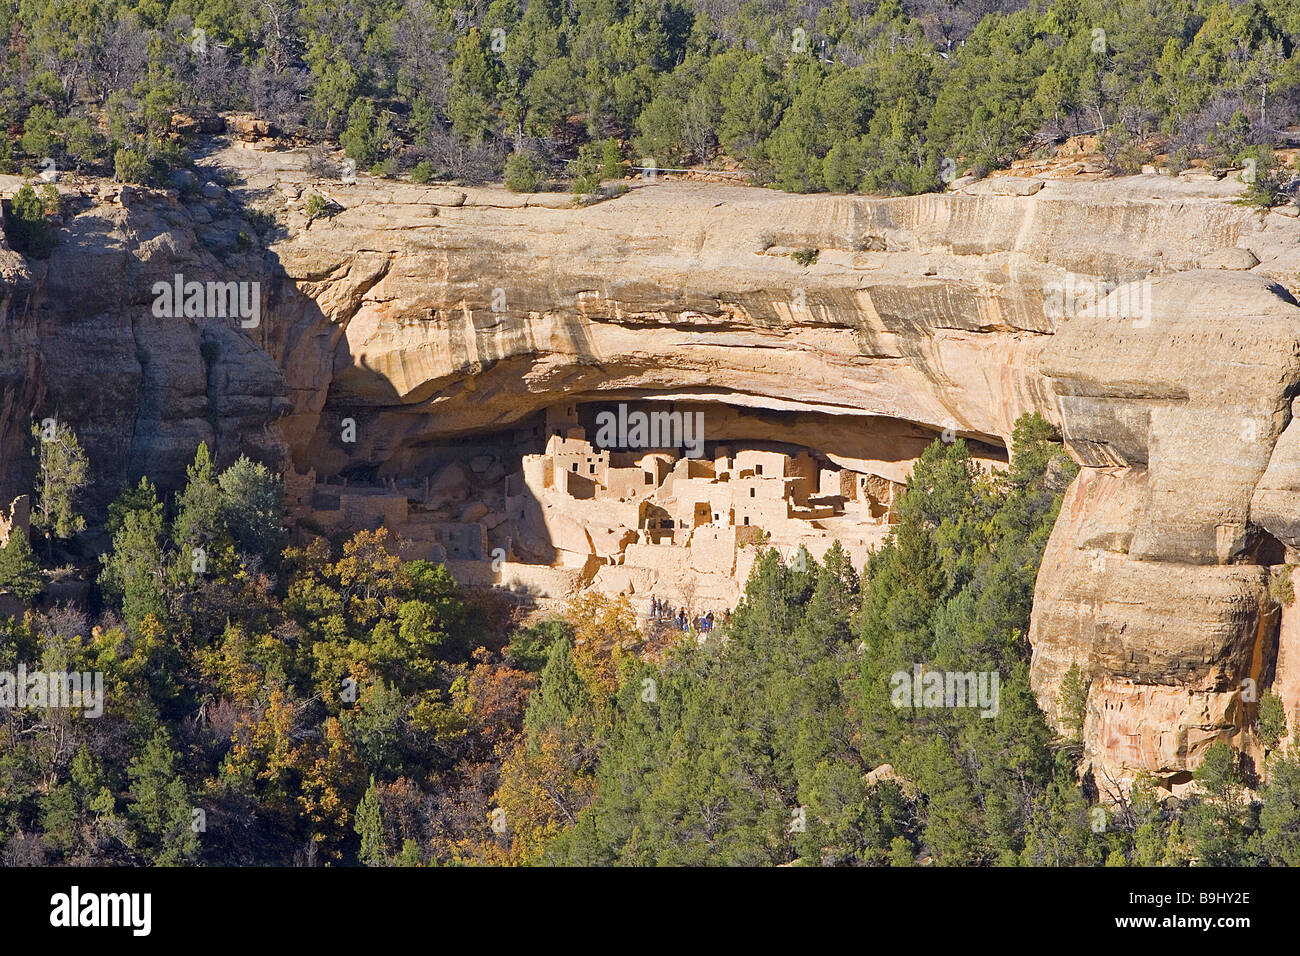 USA Colorado Mesa-Verde-Nationalpark Cliff Palace Felsen Schleuse-Gülle beherbergt Anasazi-Kultur Amerika Anblick Reise Tourismus Stockfoto